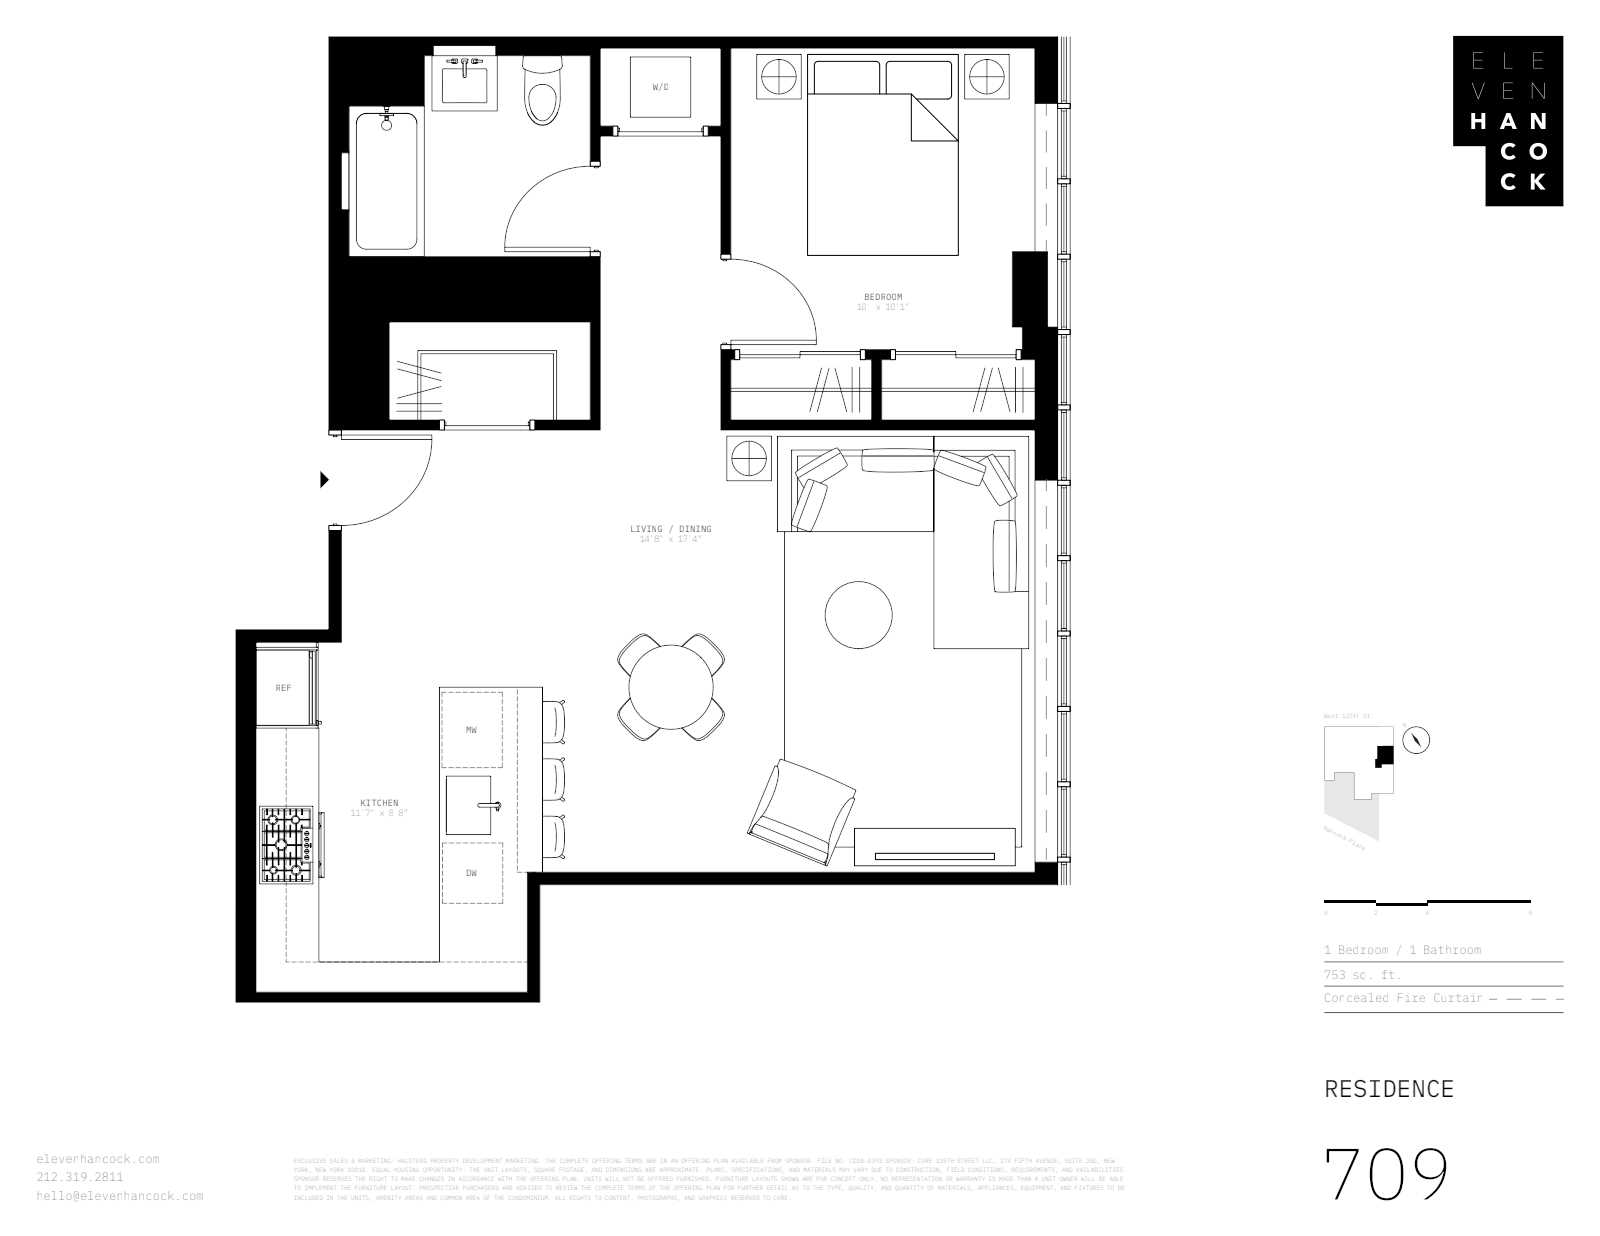 Floorplan for 11 Hancock Place, 709